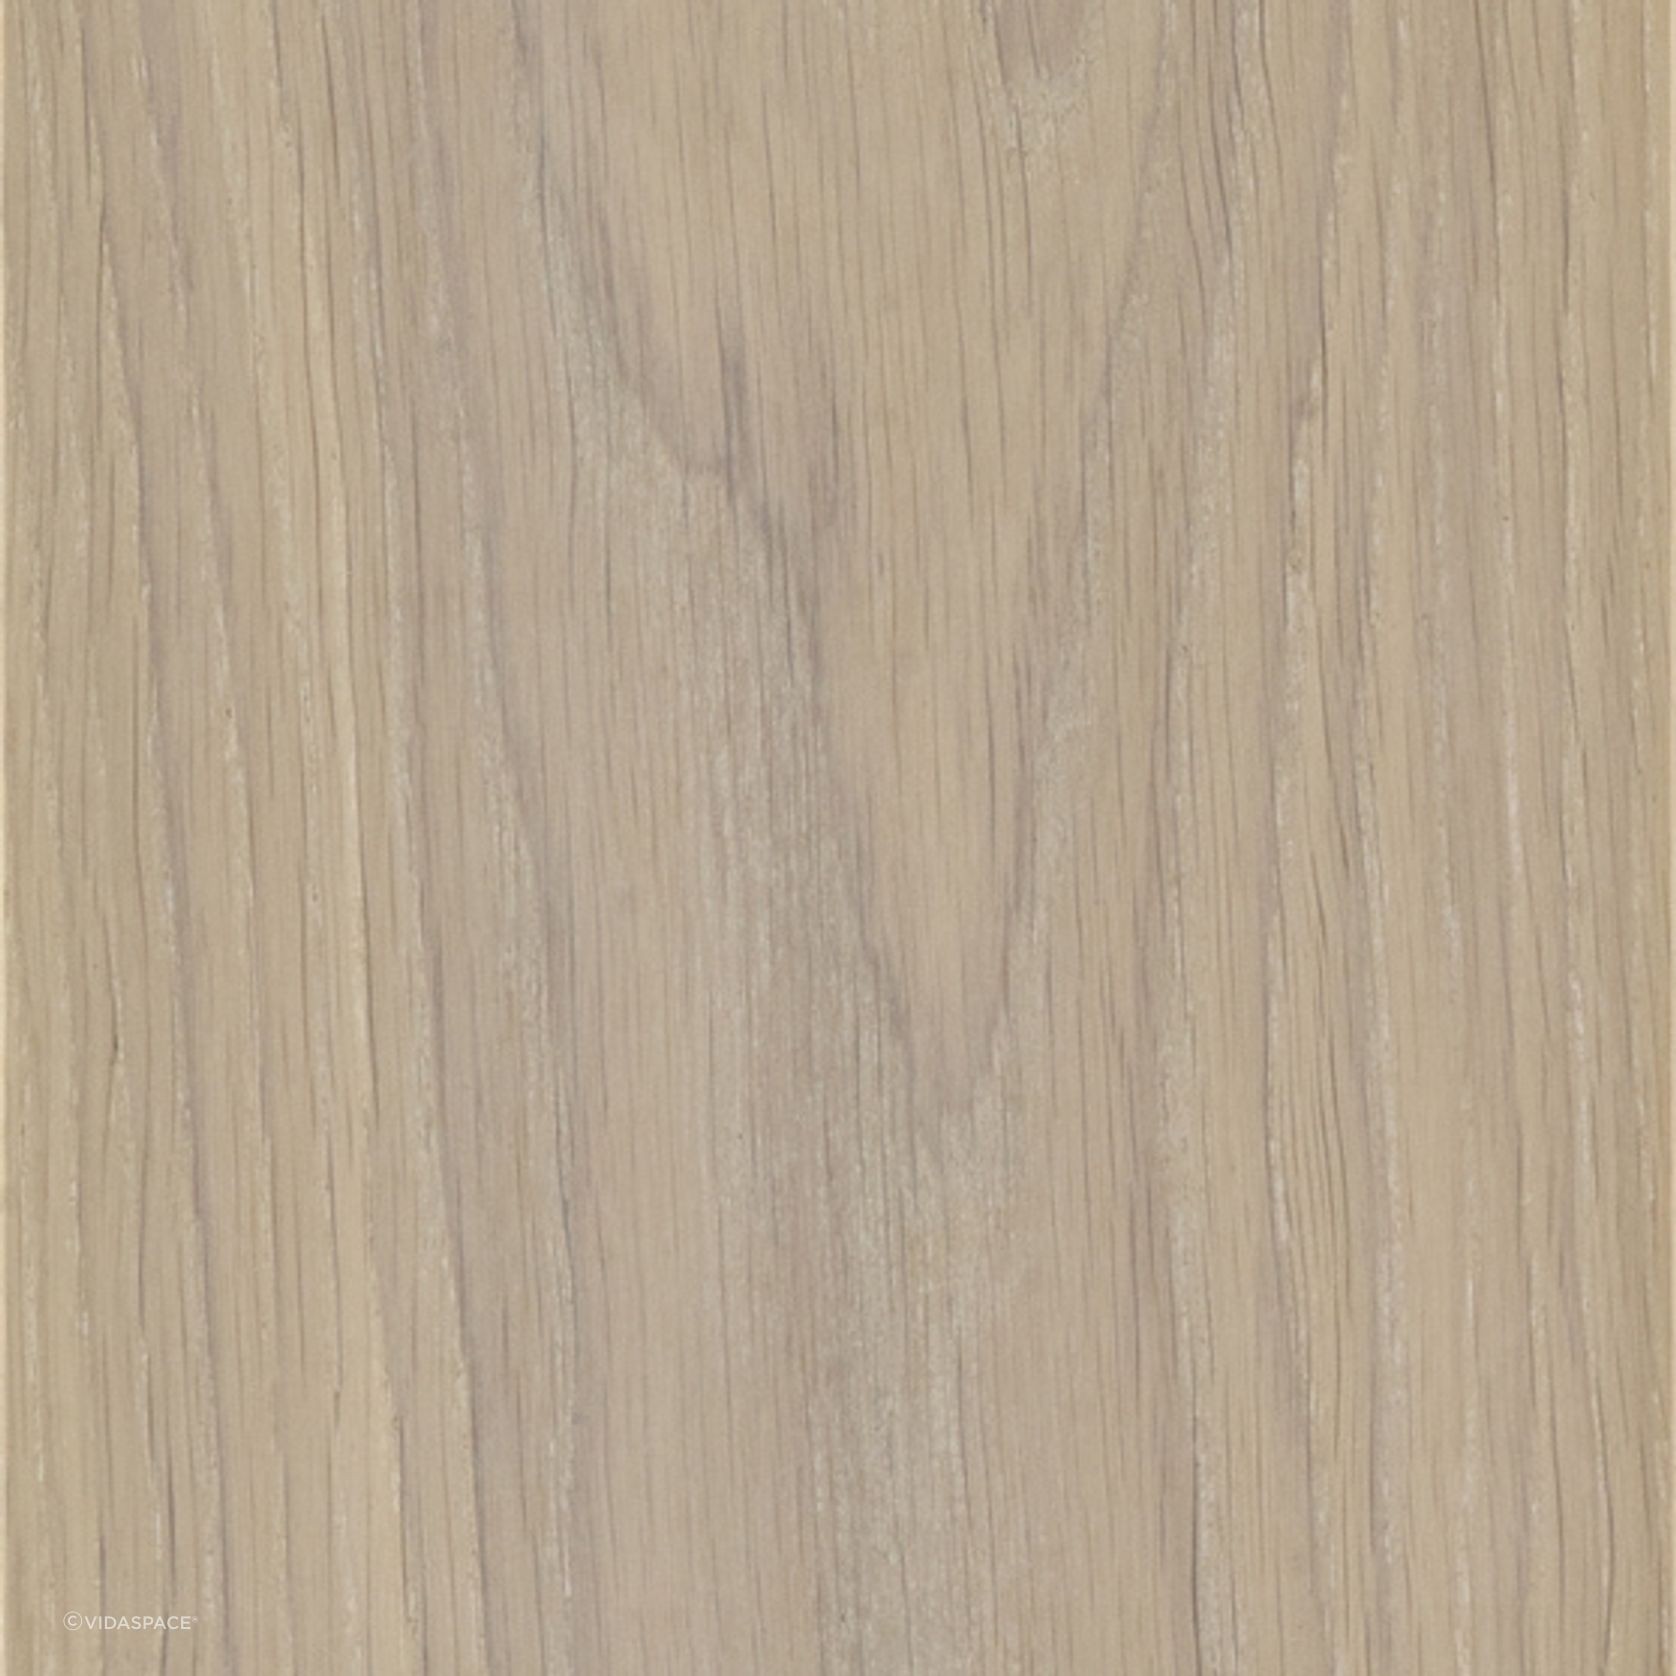 Pumice VidaPlank Oak Timber Flooring gallery detail image